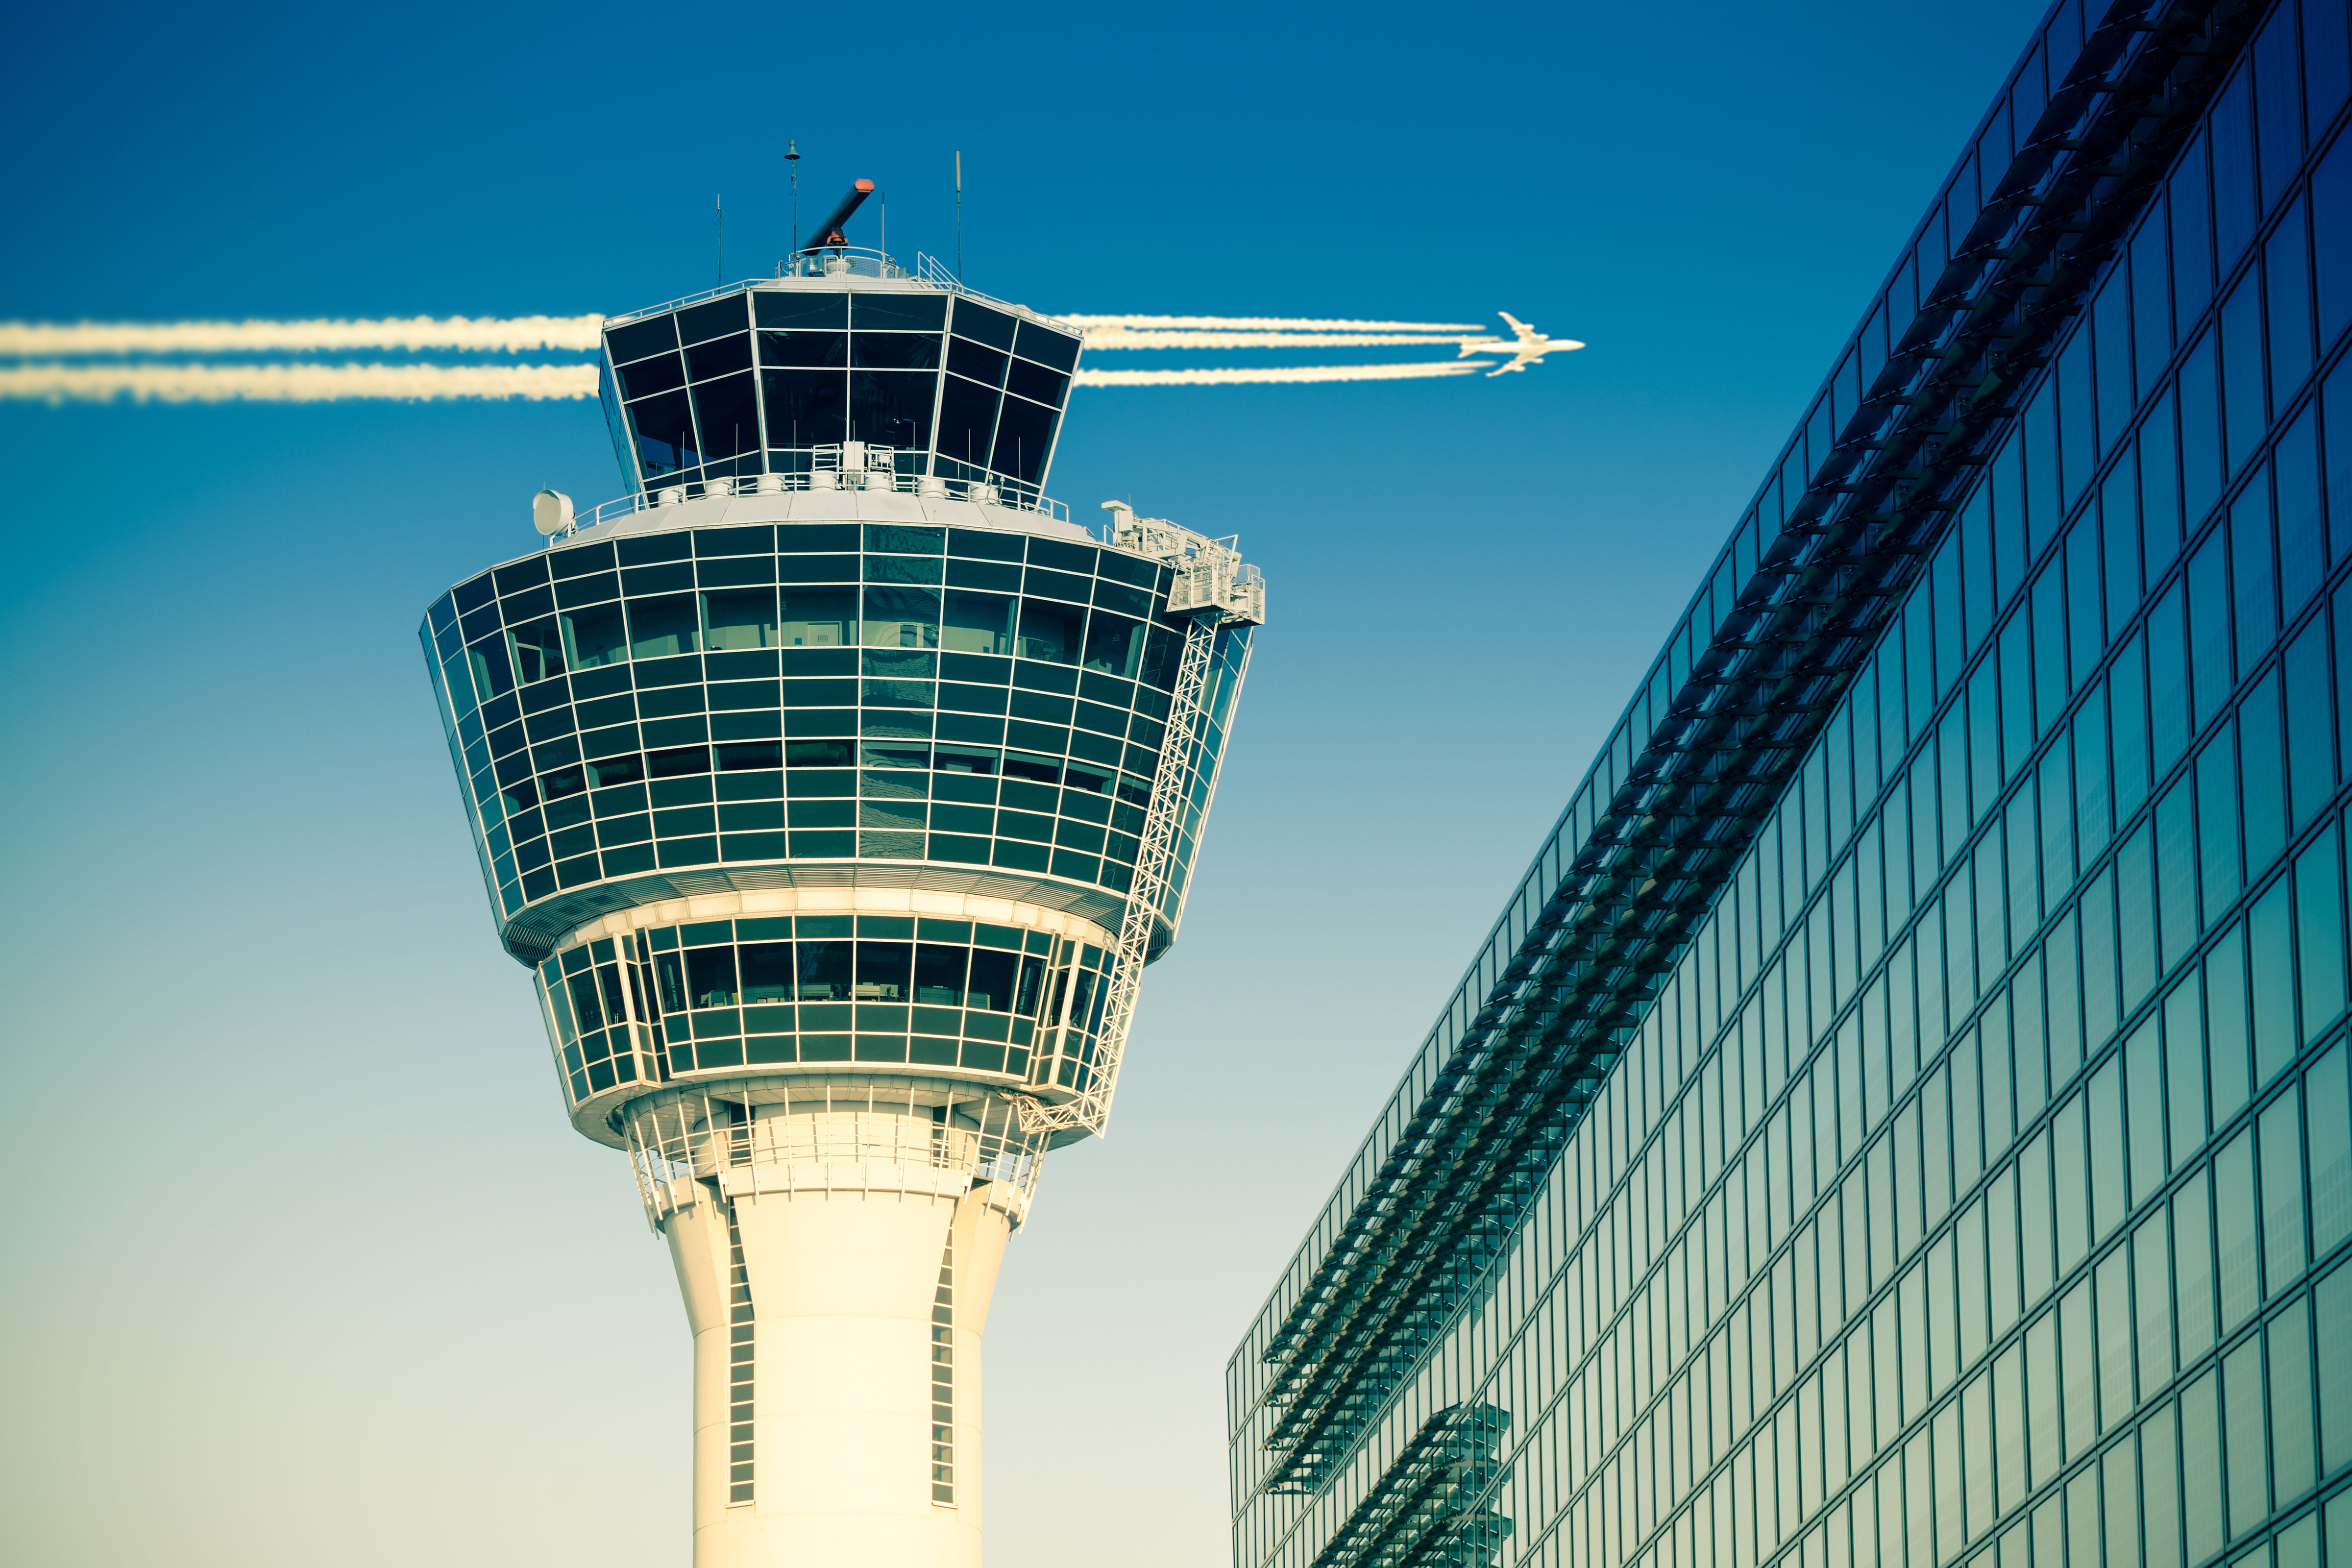 Munich Airport ATC Tower & Contrails